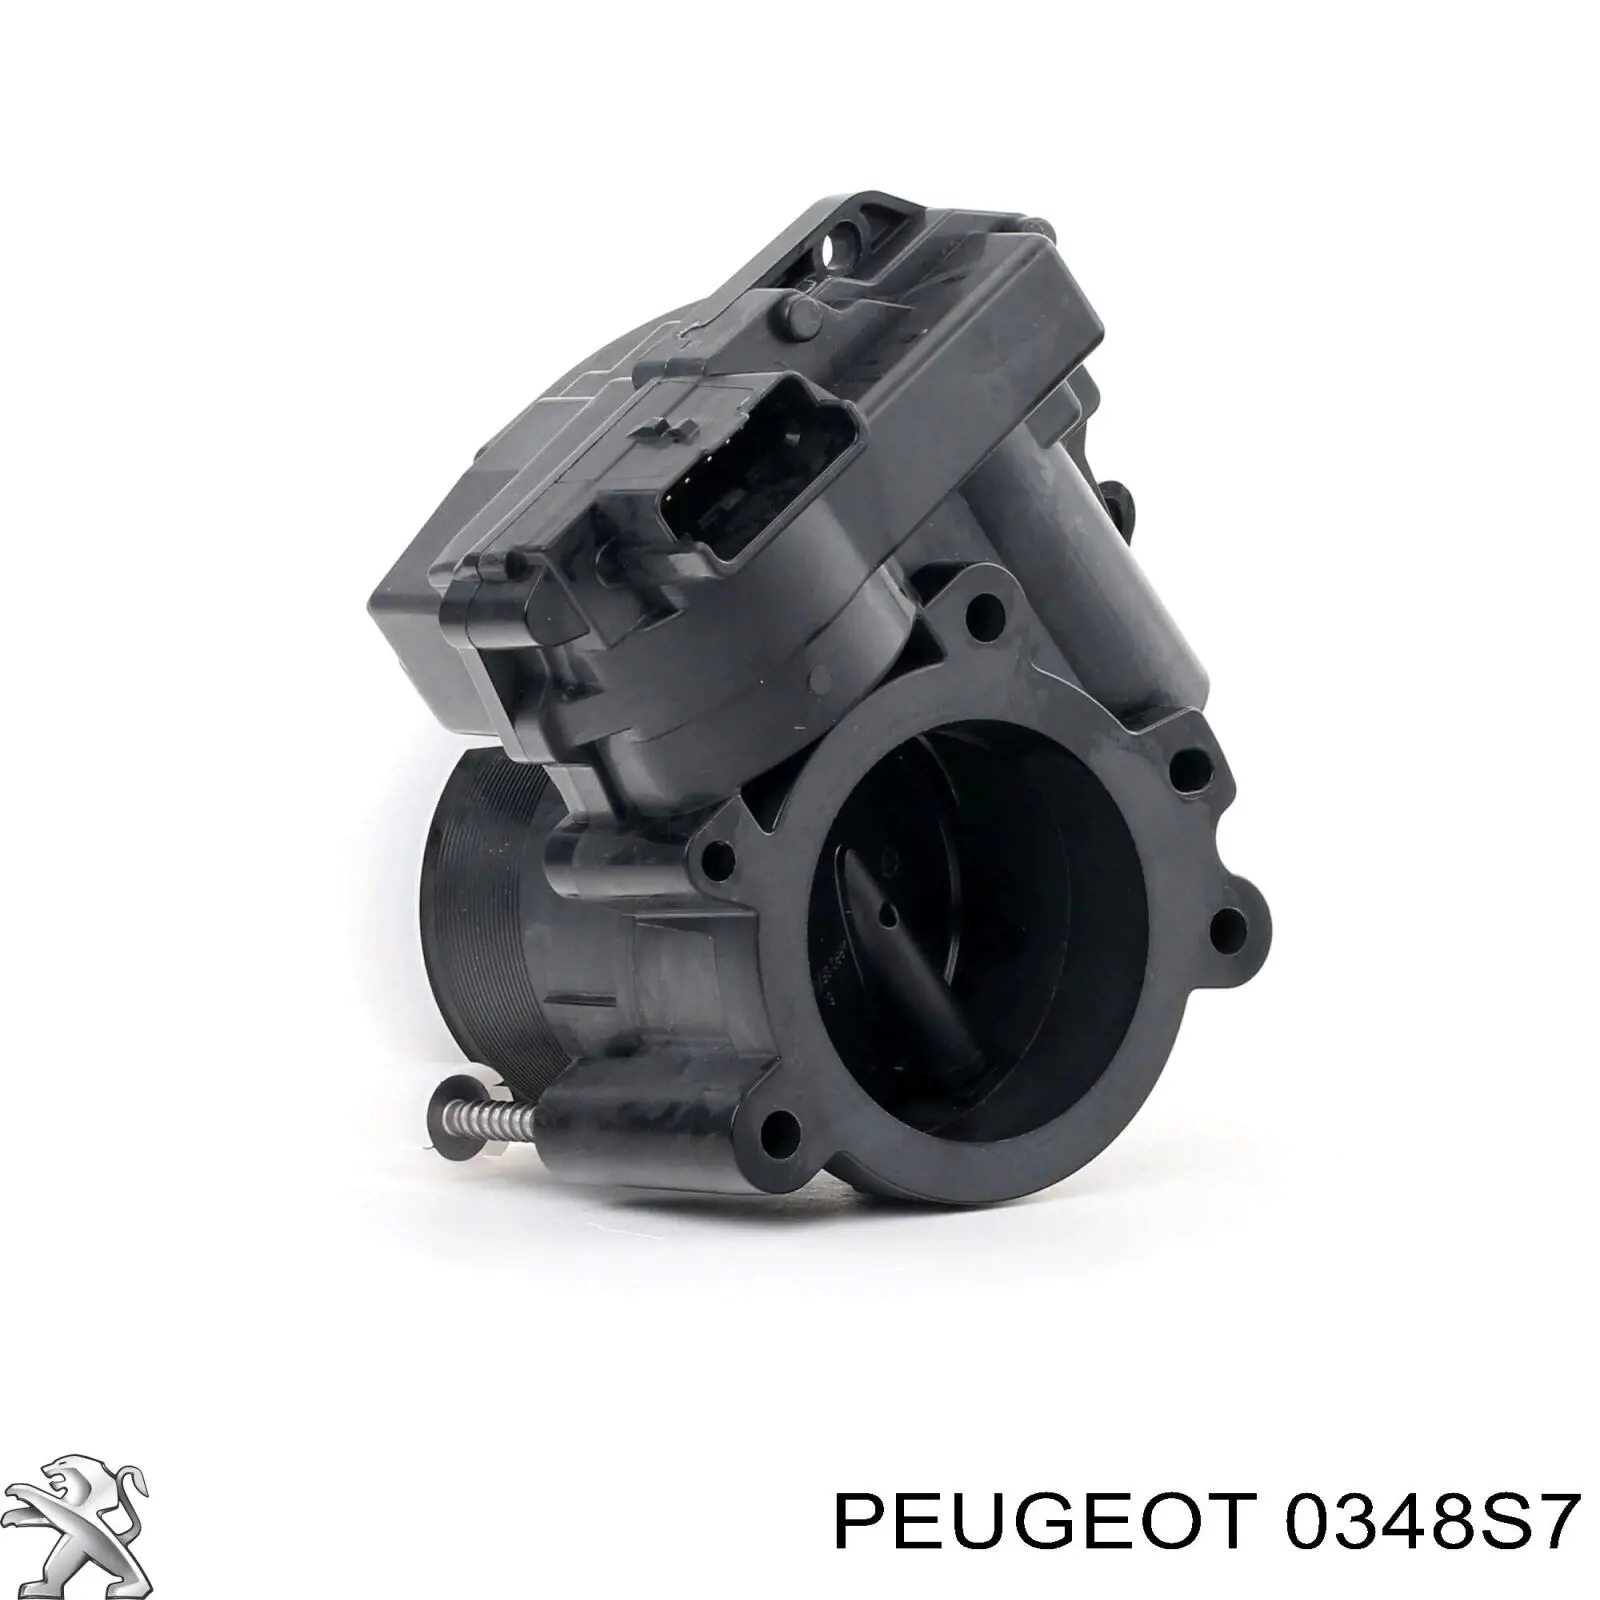 3649490 Peugeot/Citroen vedante de tubo coletor de admissão